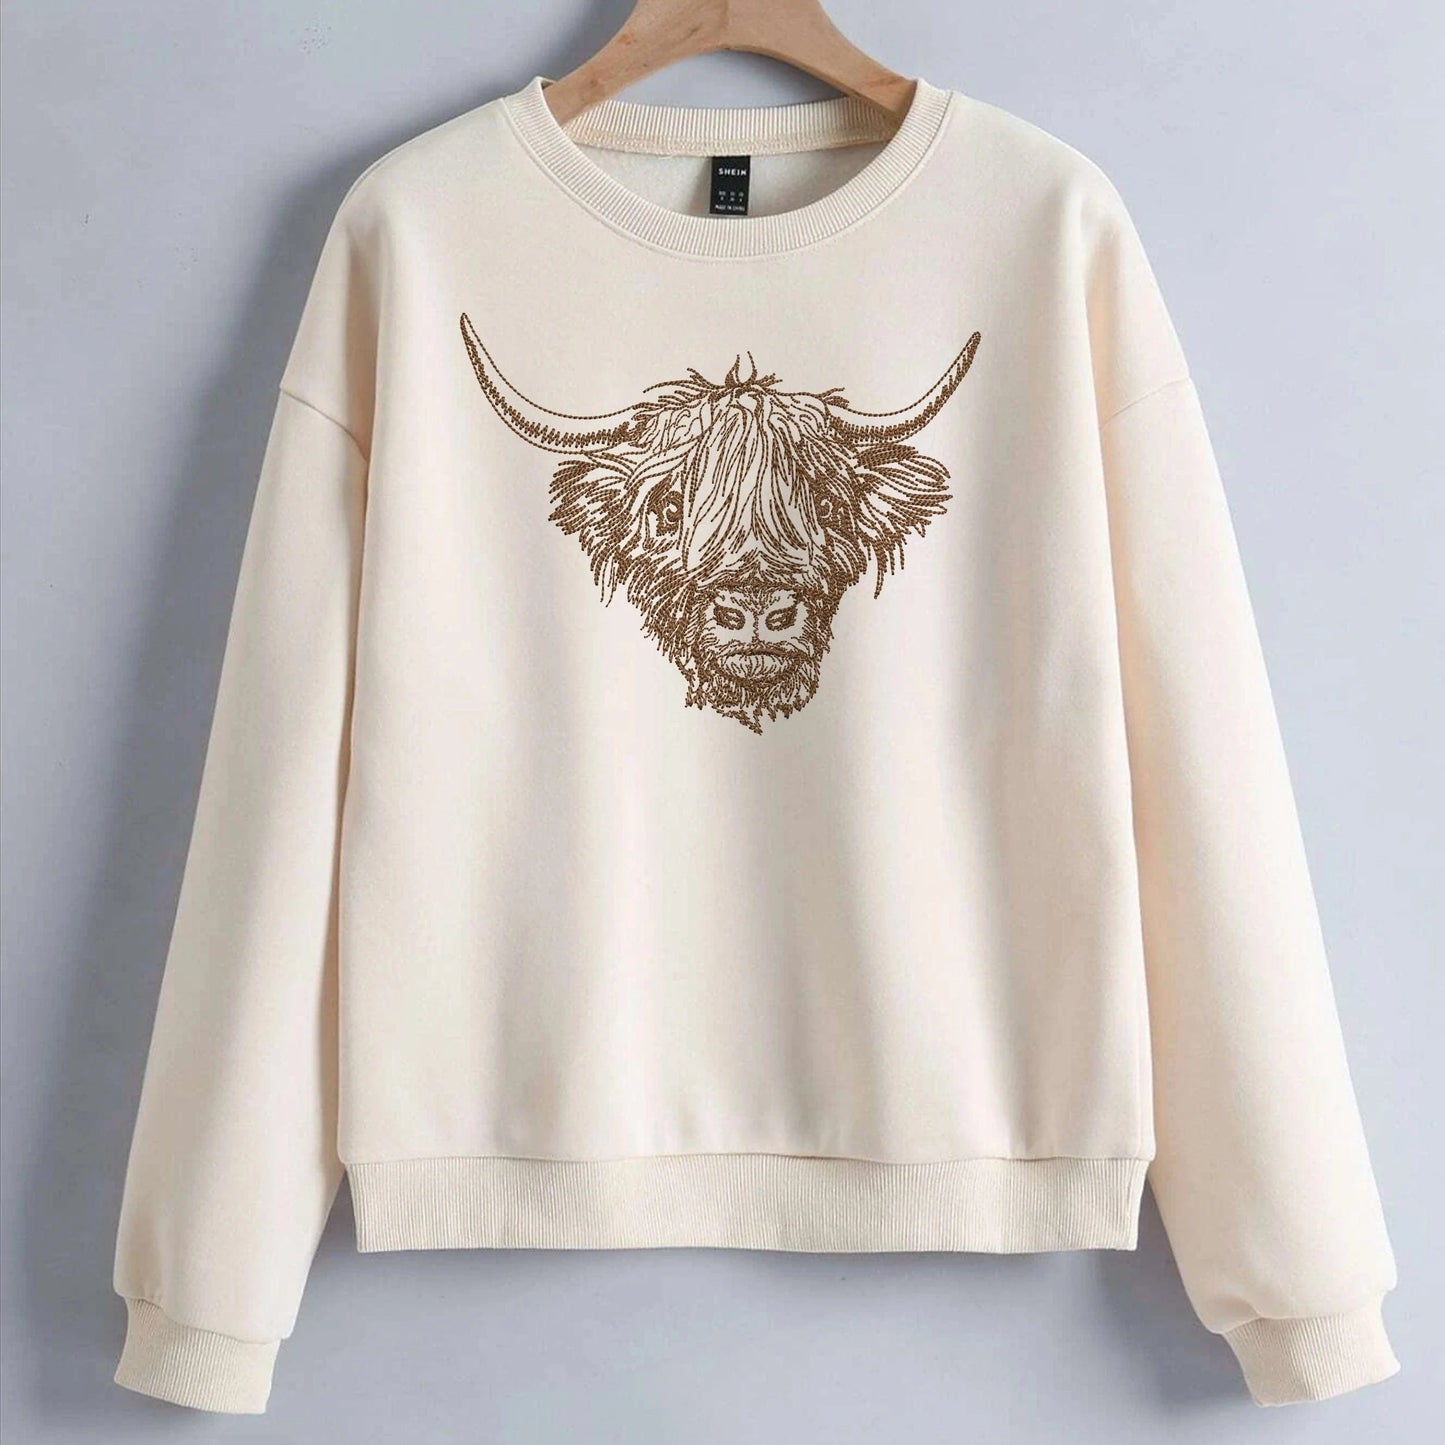 Scottish Cow Machine Embroidery Design on sweatshirt